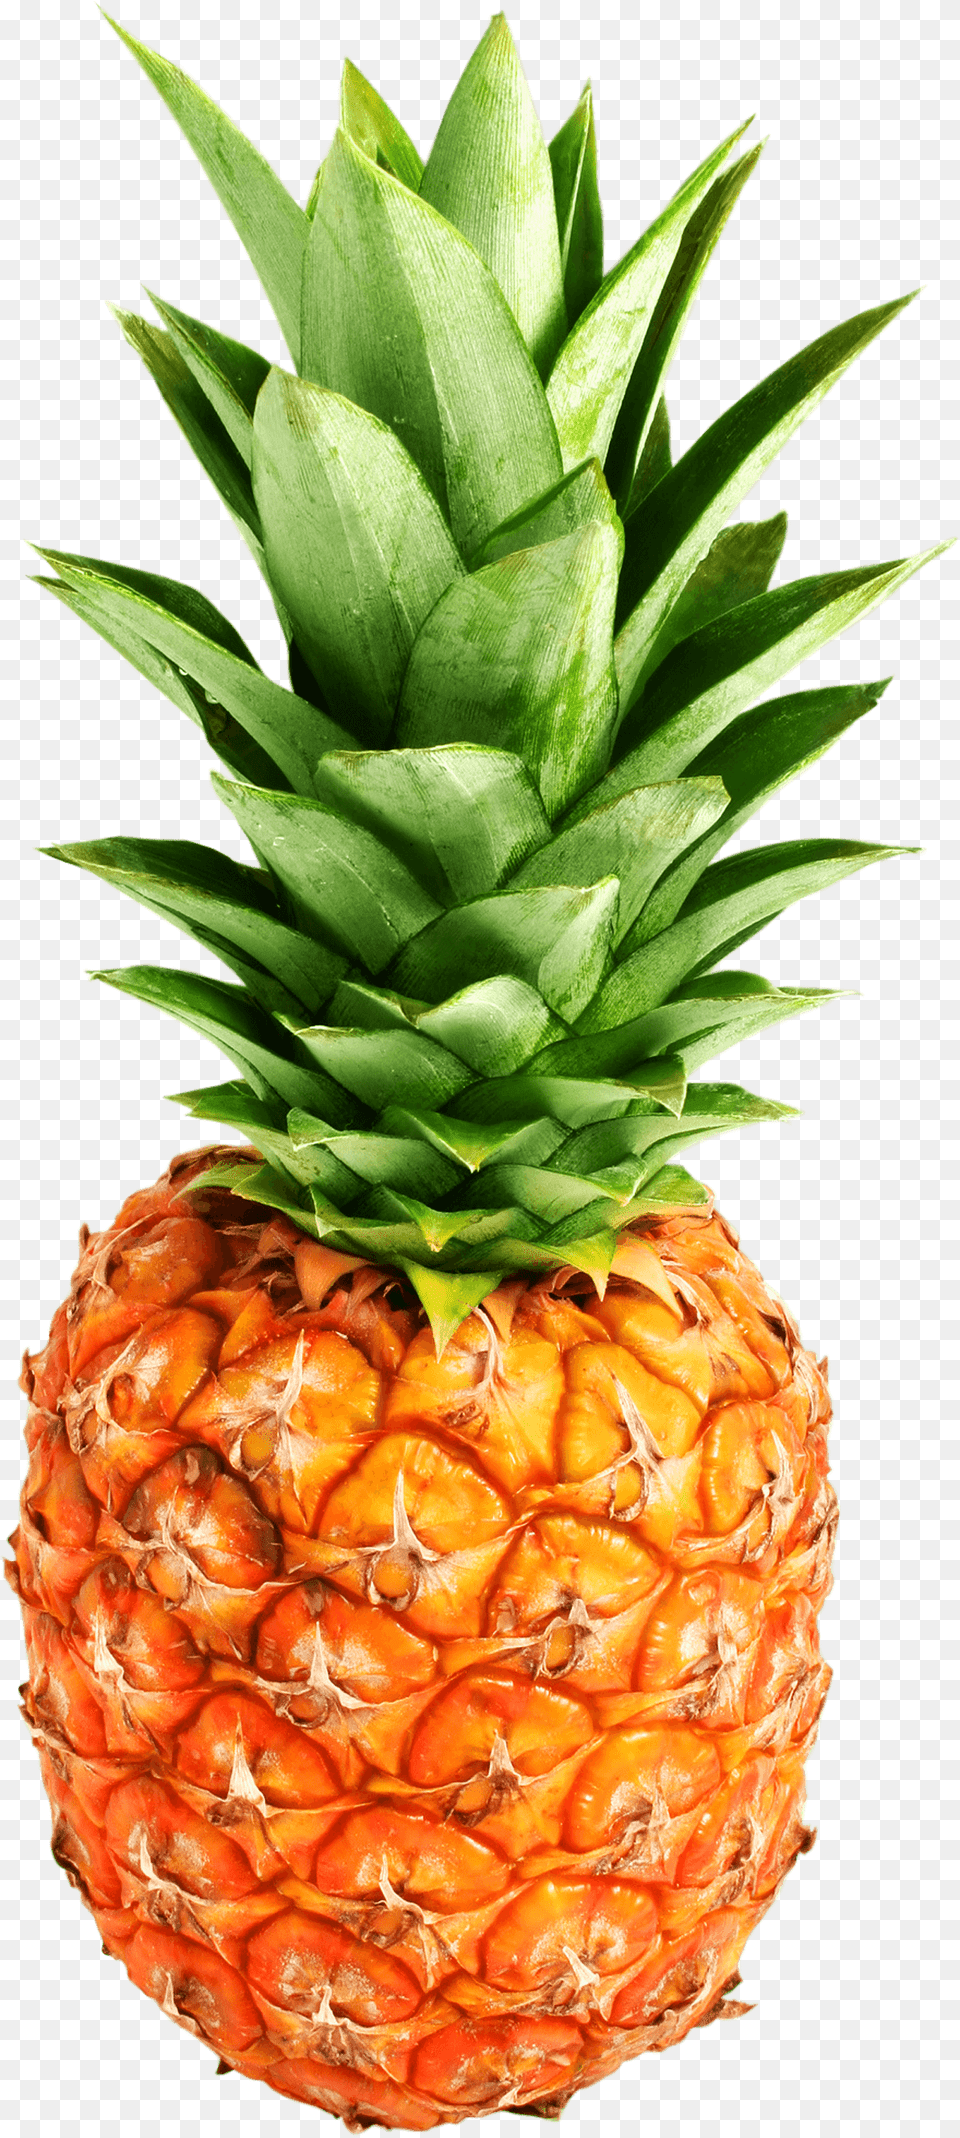 Orange Pineapple, Food, Fruit, Plant, Produce Png Image